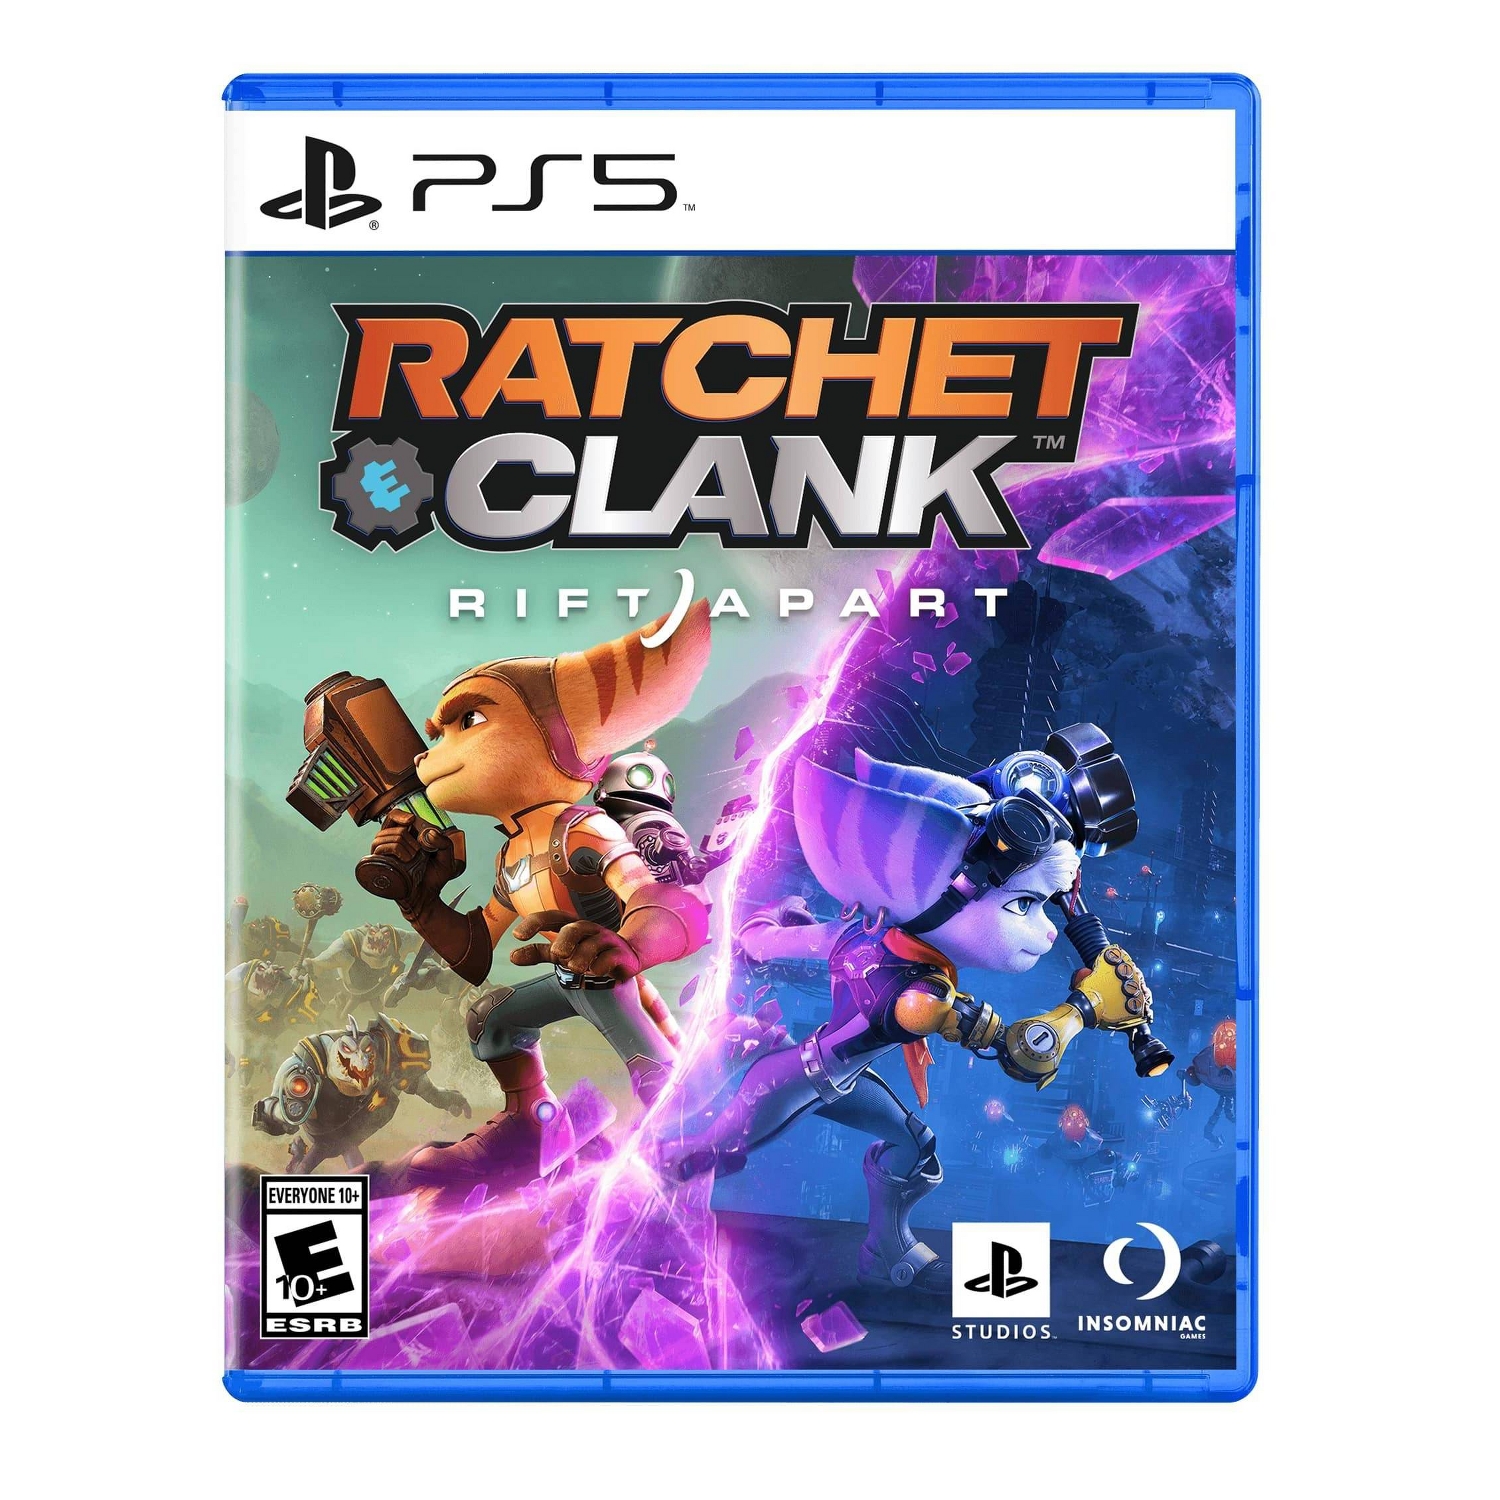 Ratchet & Clank Rift Apart PS5 $48.99 YMMV at Target